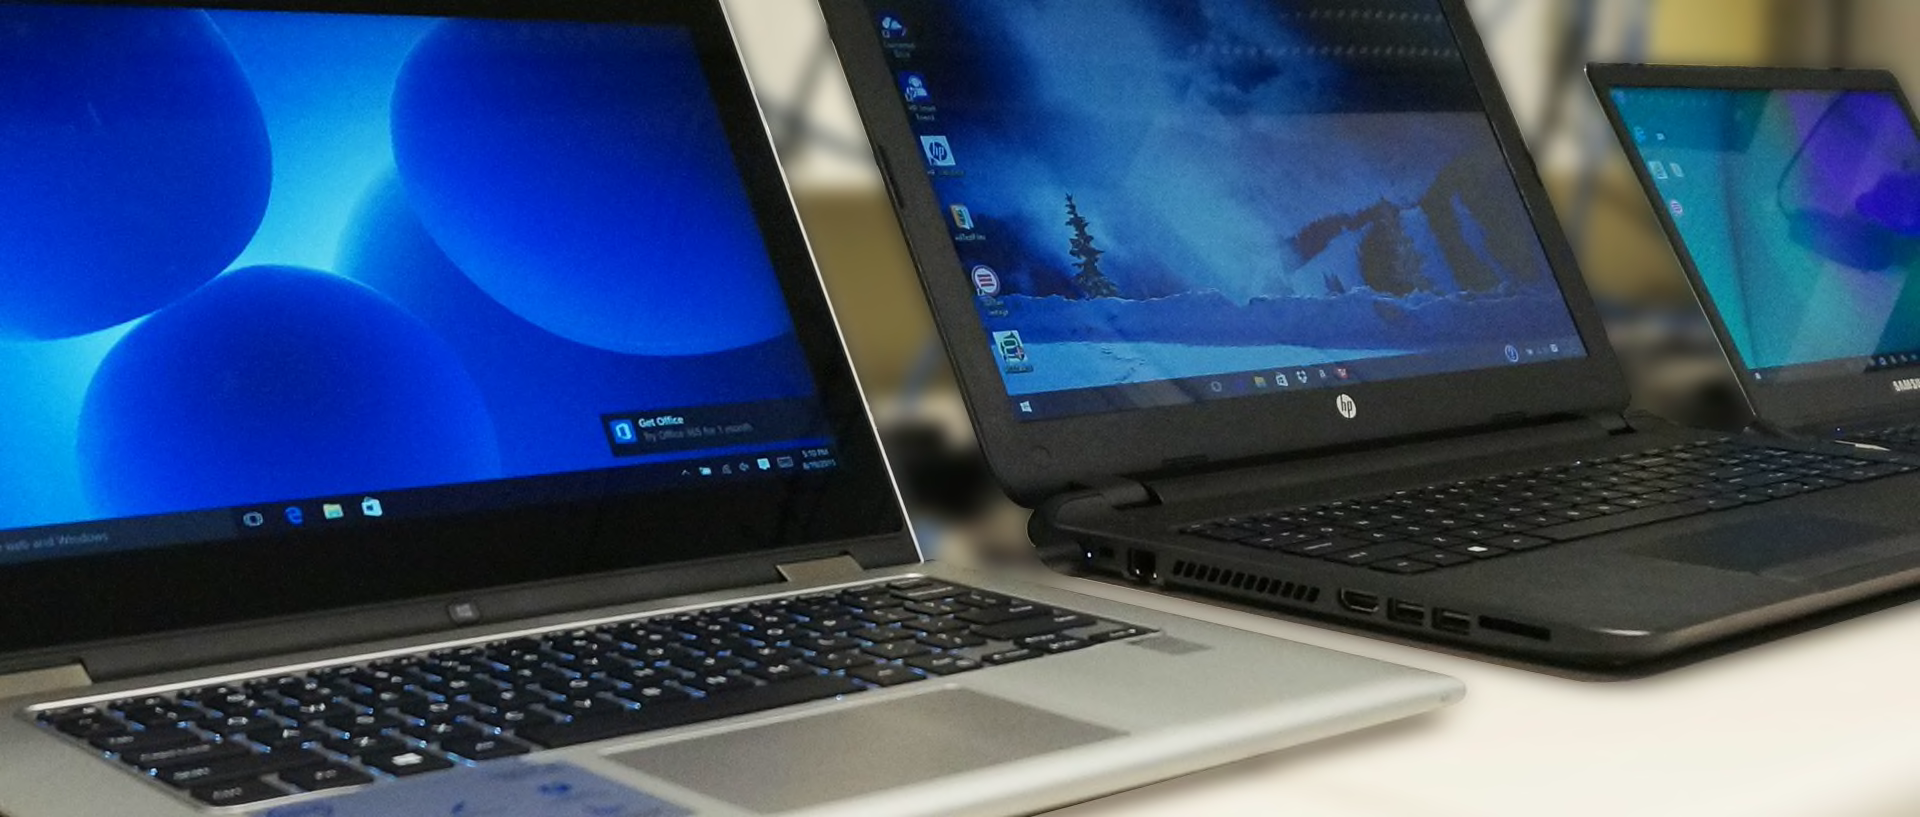 Windows 10 Laptop Reviews - Consumer Reports